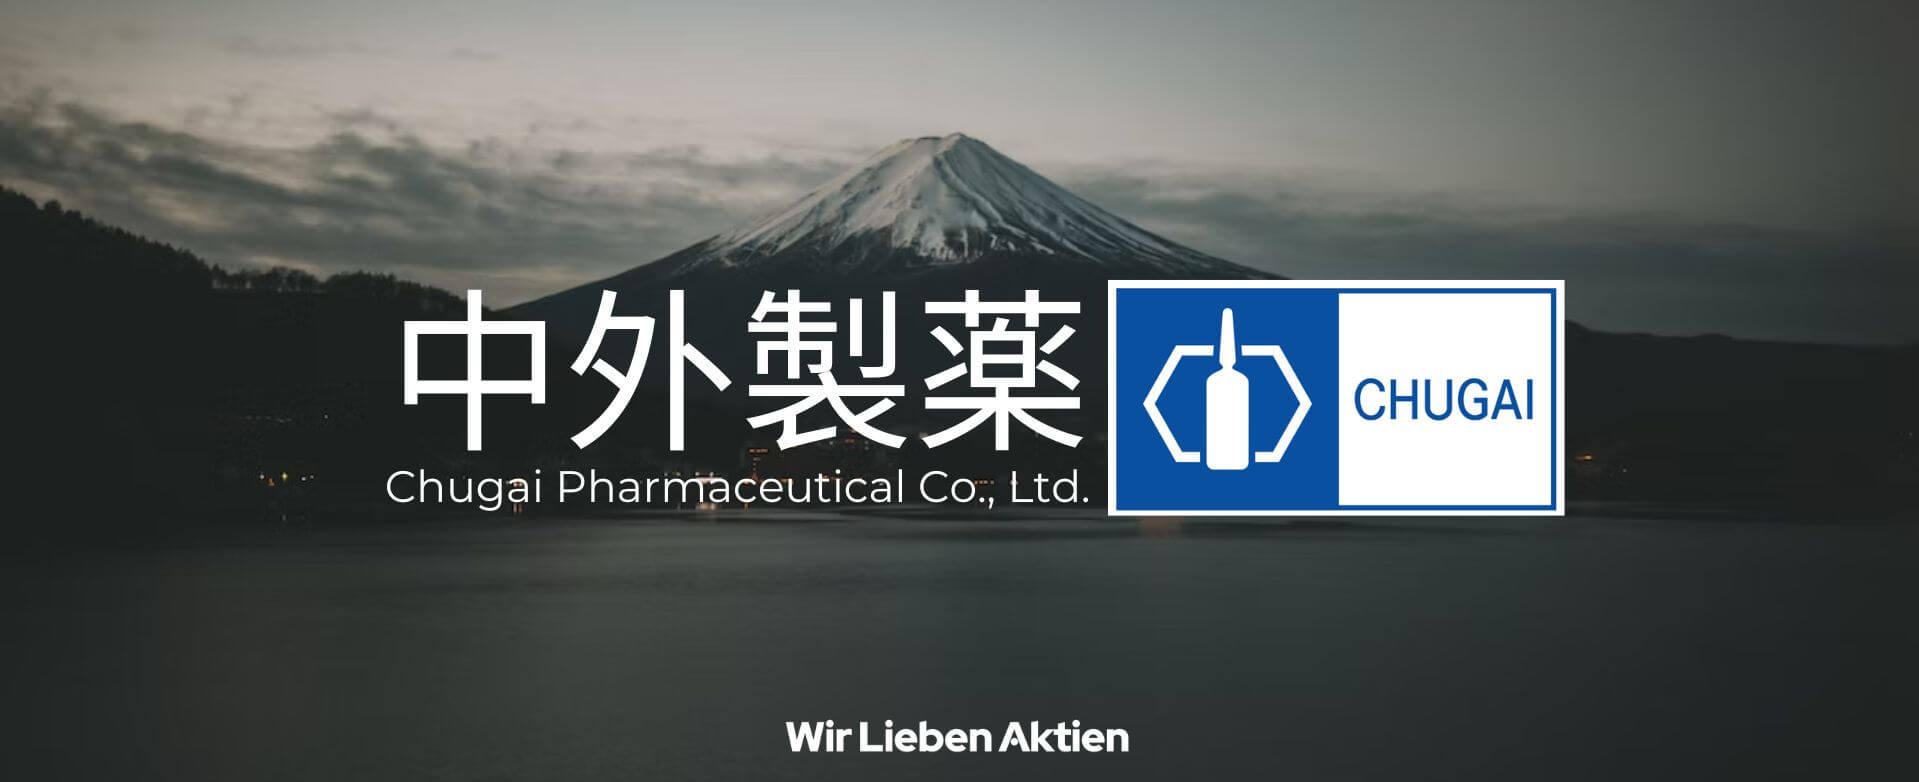 Chugai Pharmaceutical Aktie Analyse - Pharma-Champion aus Japan